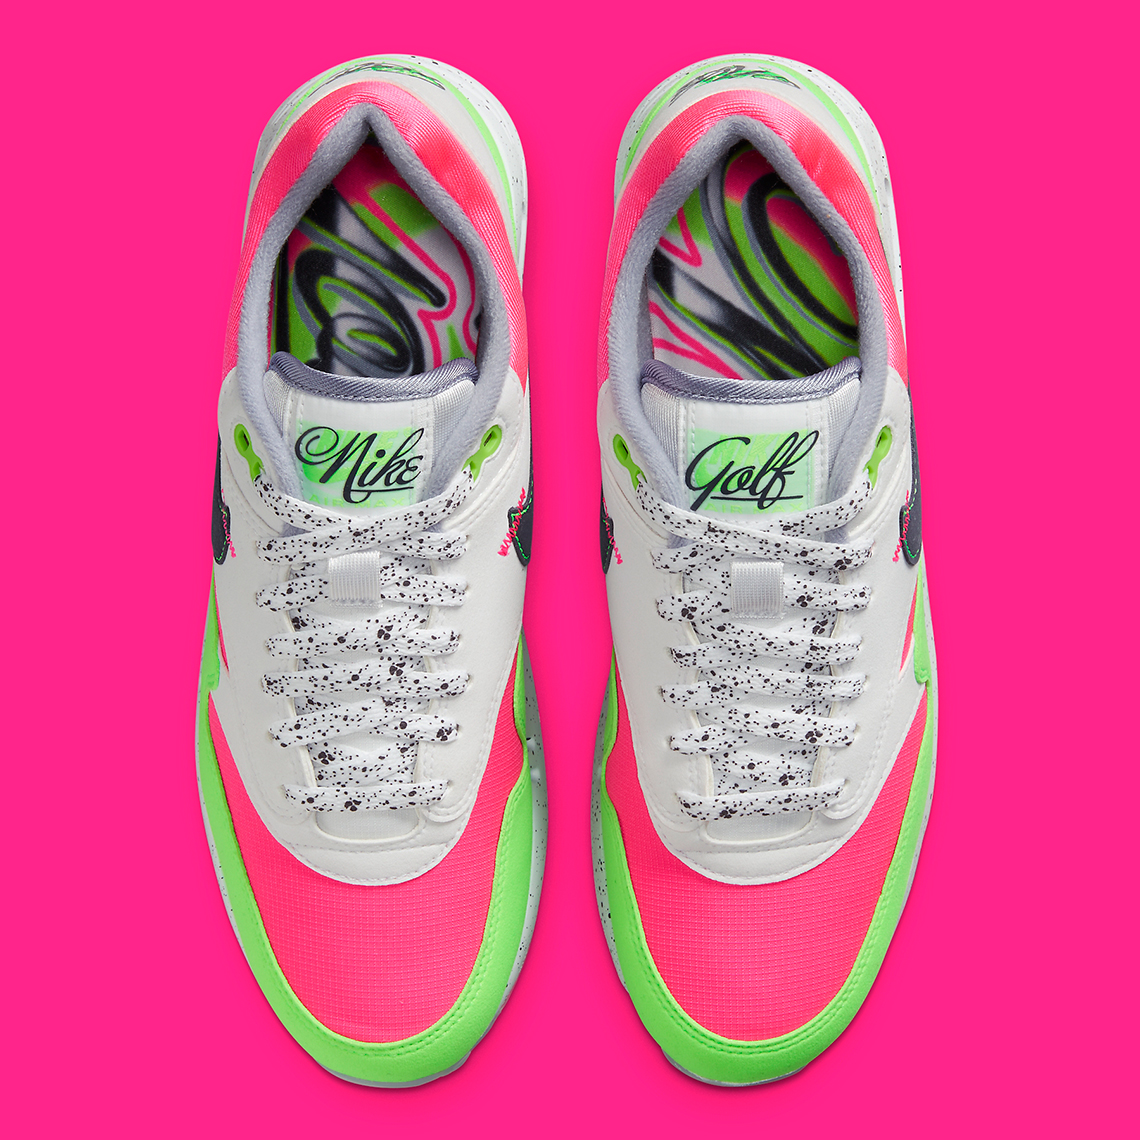 Nike nike air max foamdome boot for sale Airbrush Green Pink 8